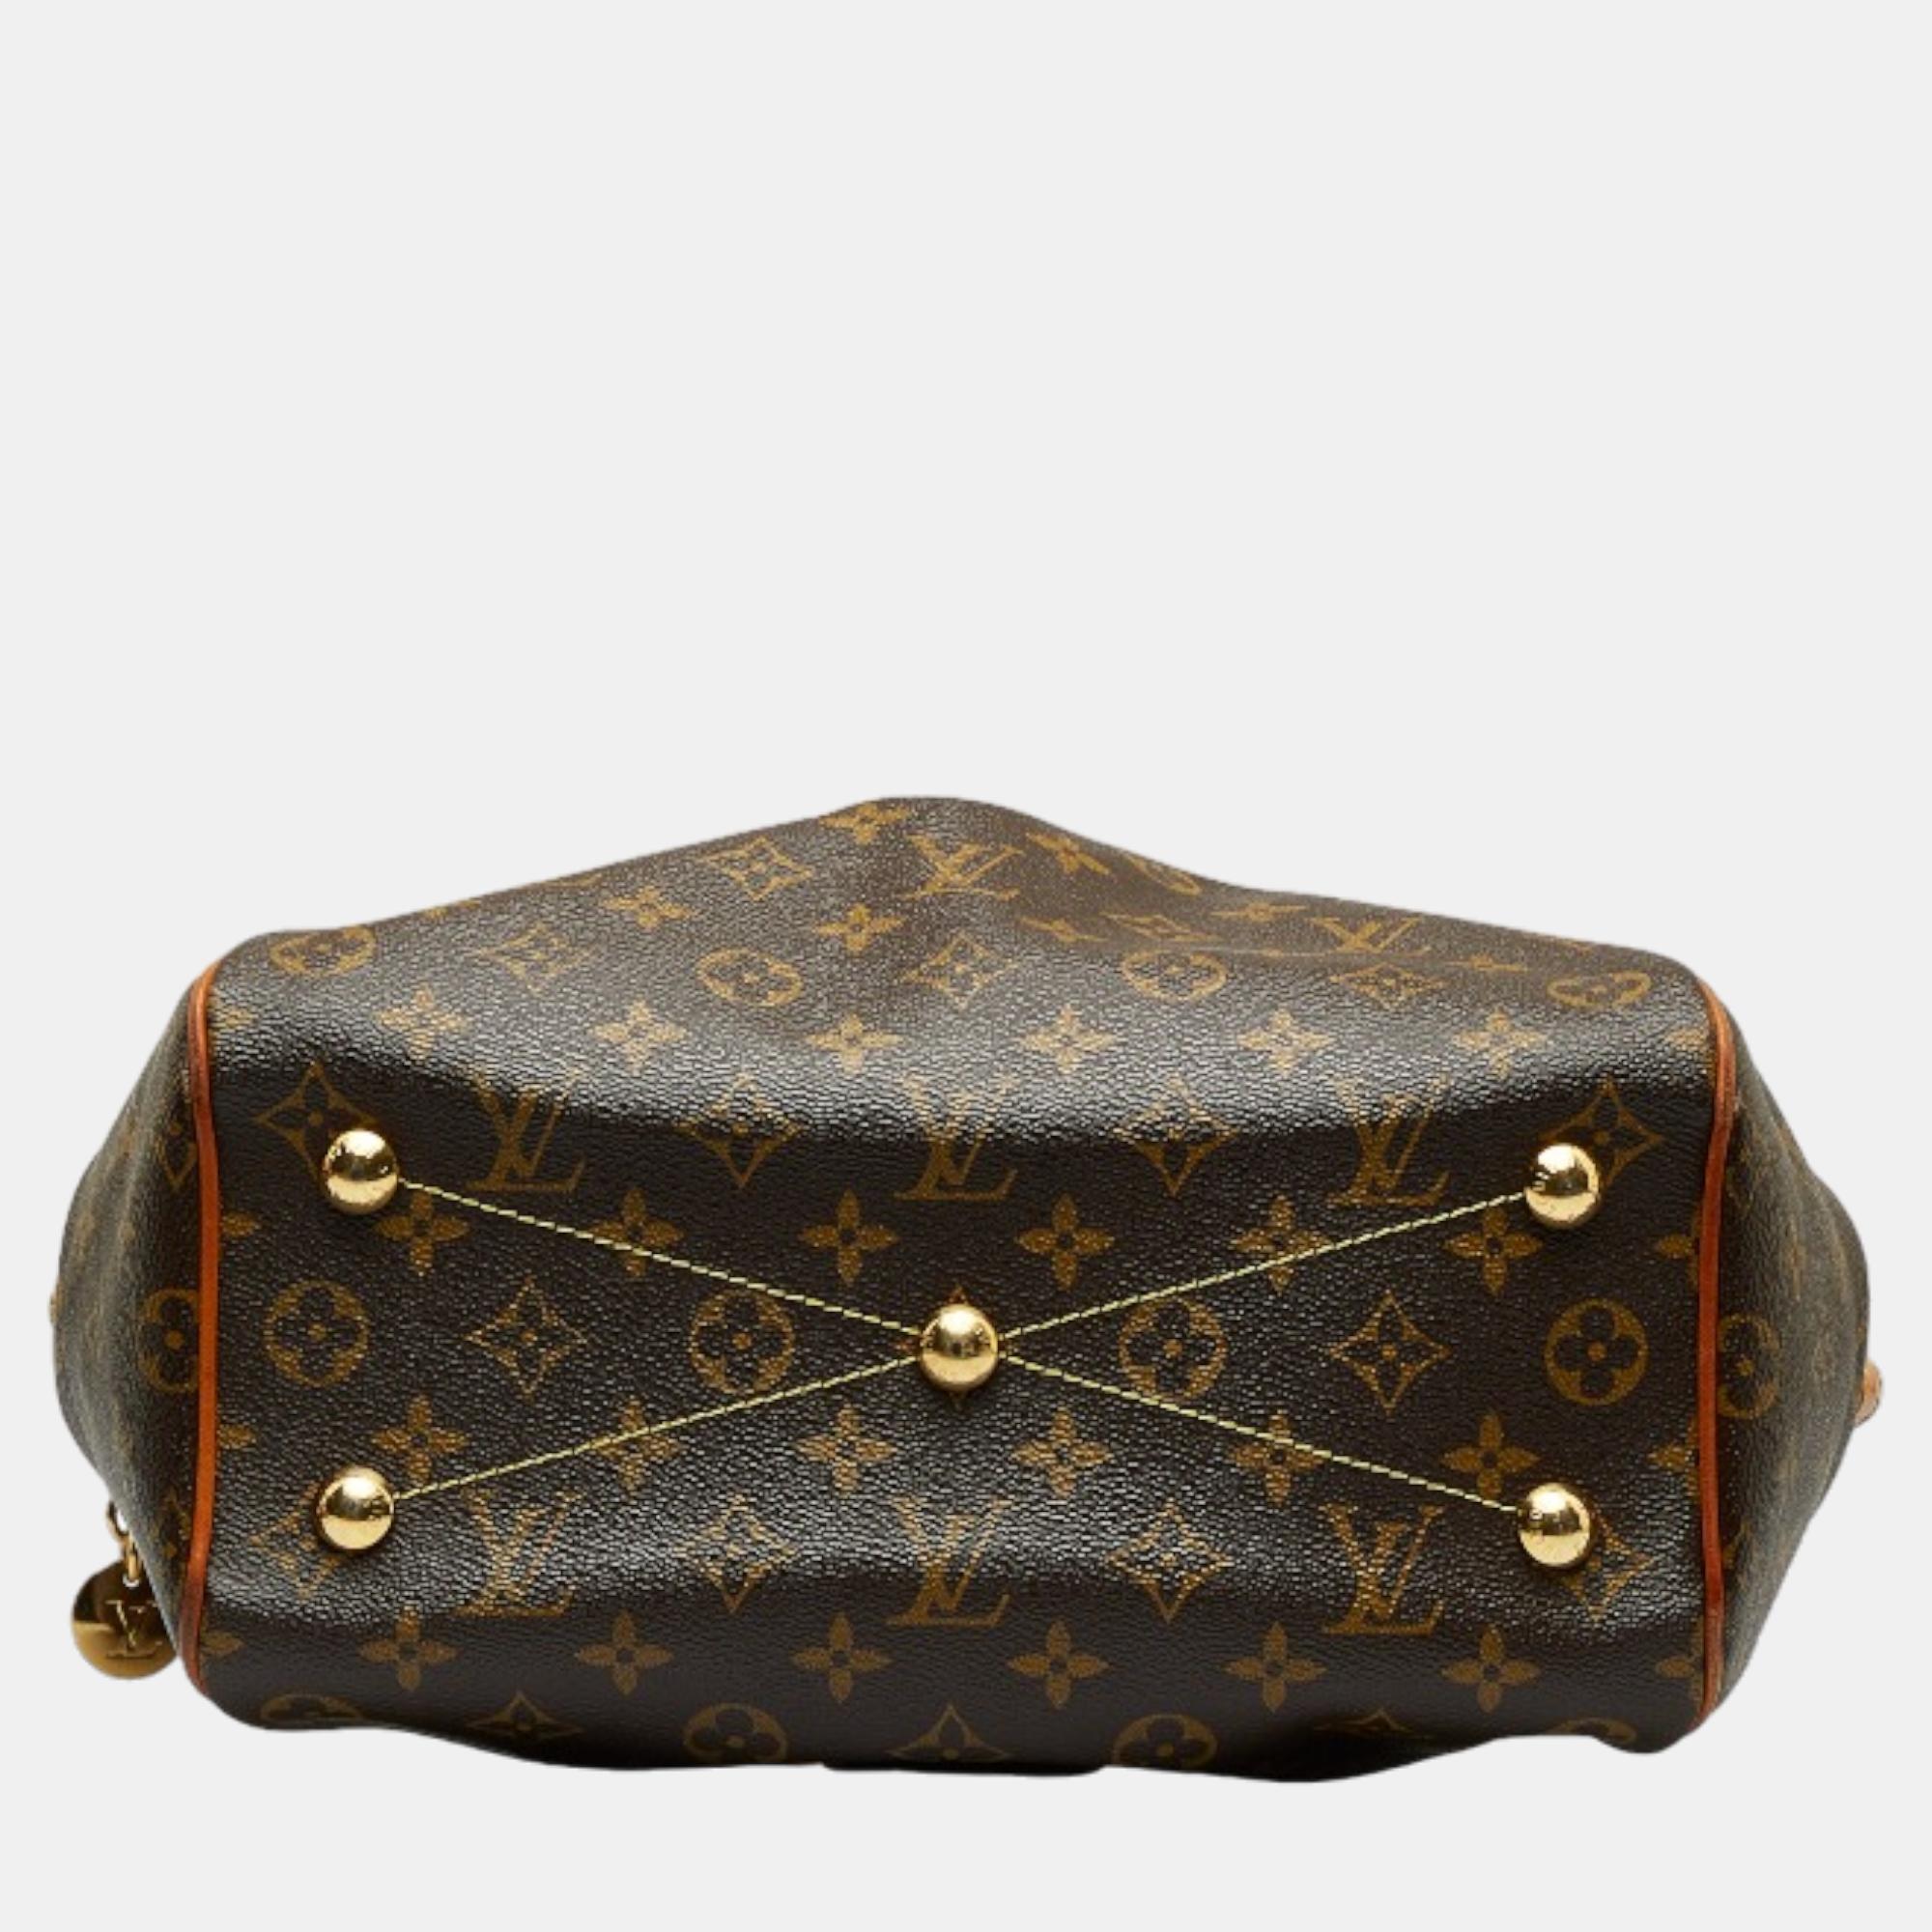 Louis Vuitton Brown Canvas Monogram Tivoli PM Handbag